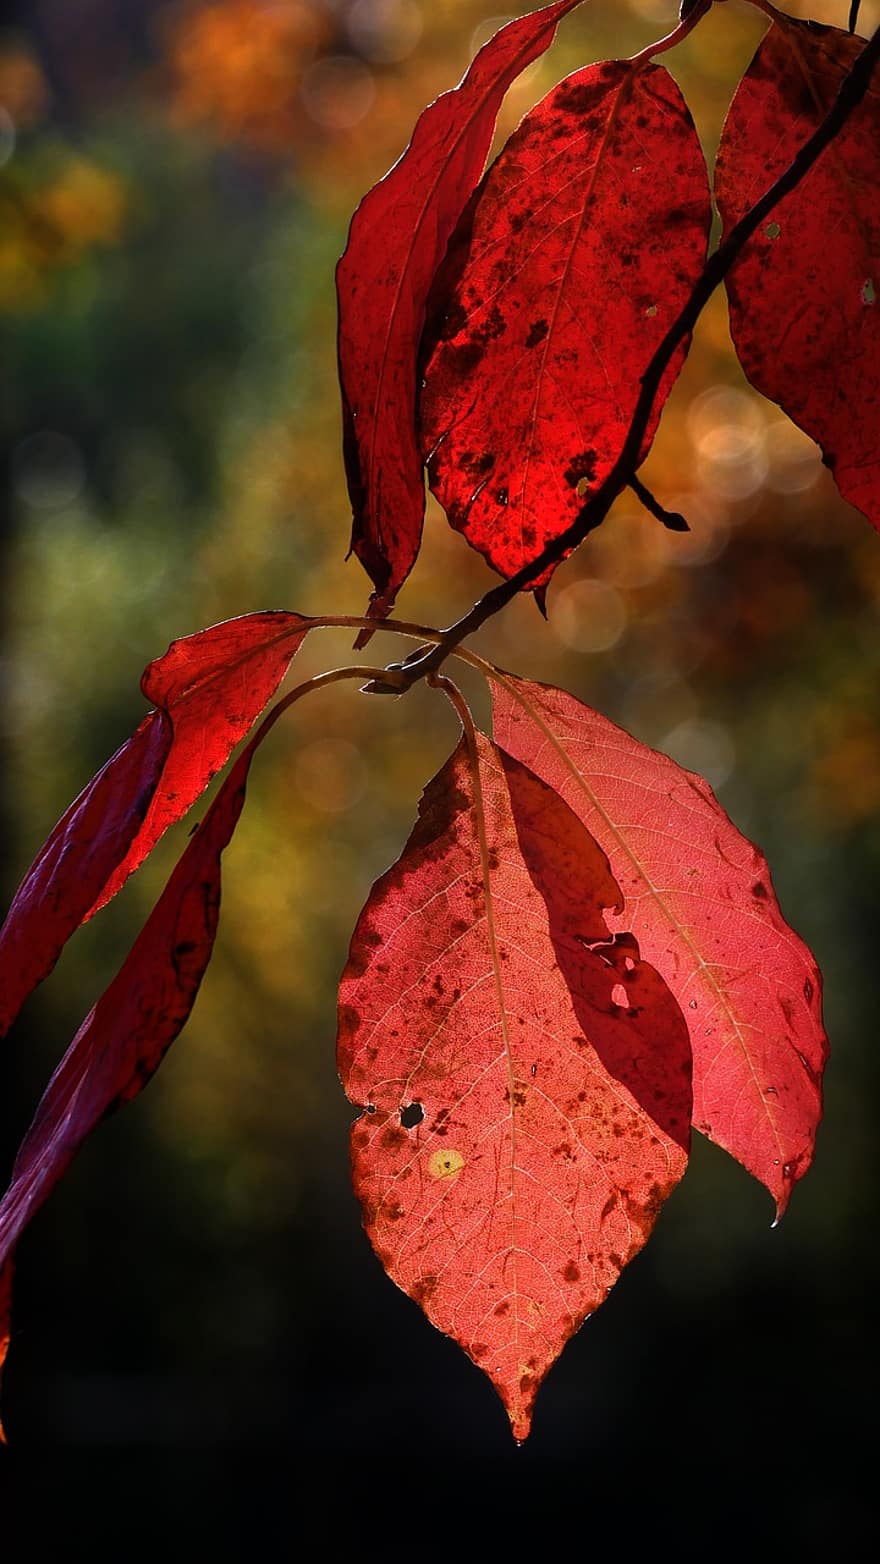 Fall, Red Leaves, Foliage, Autumn, Nature, leaf, season, yellow, tree, close-up, vibrant color